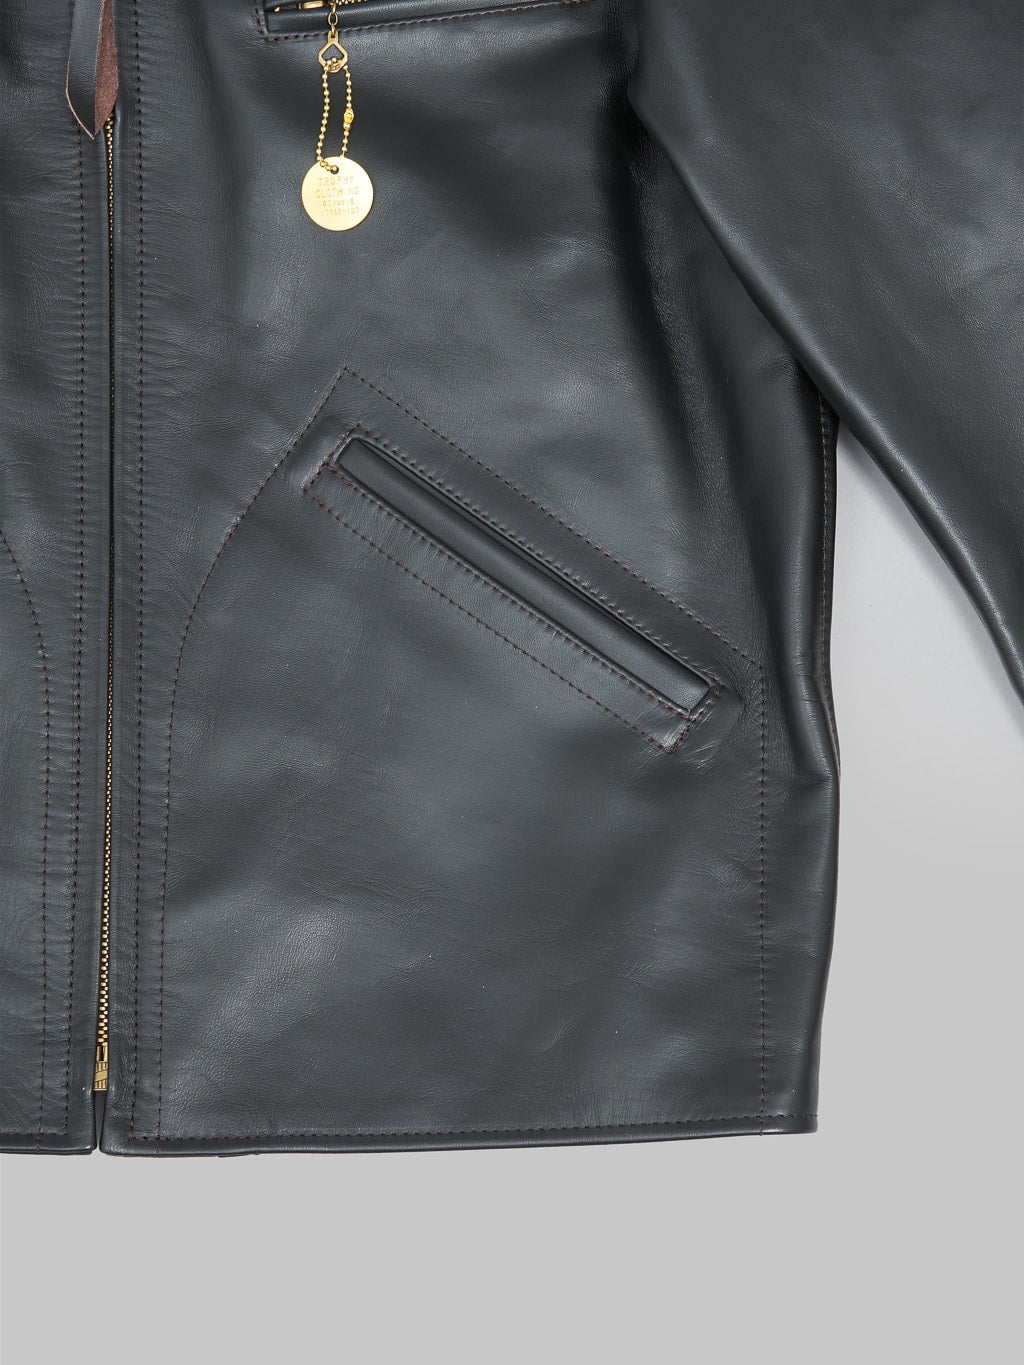 Trophy Clothing Humming Bird Horsehide leather Jacket Black  pocket closeup